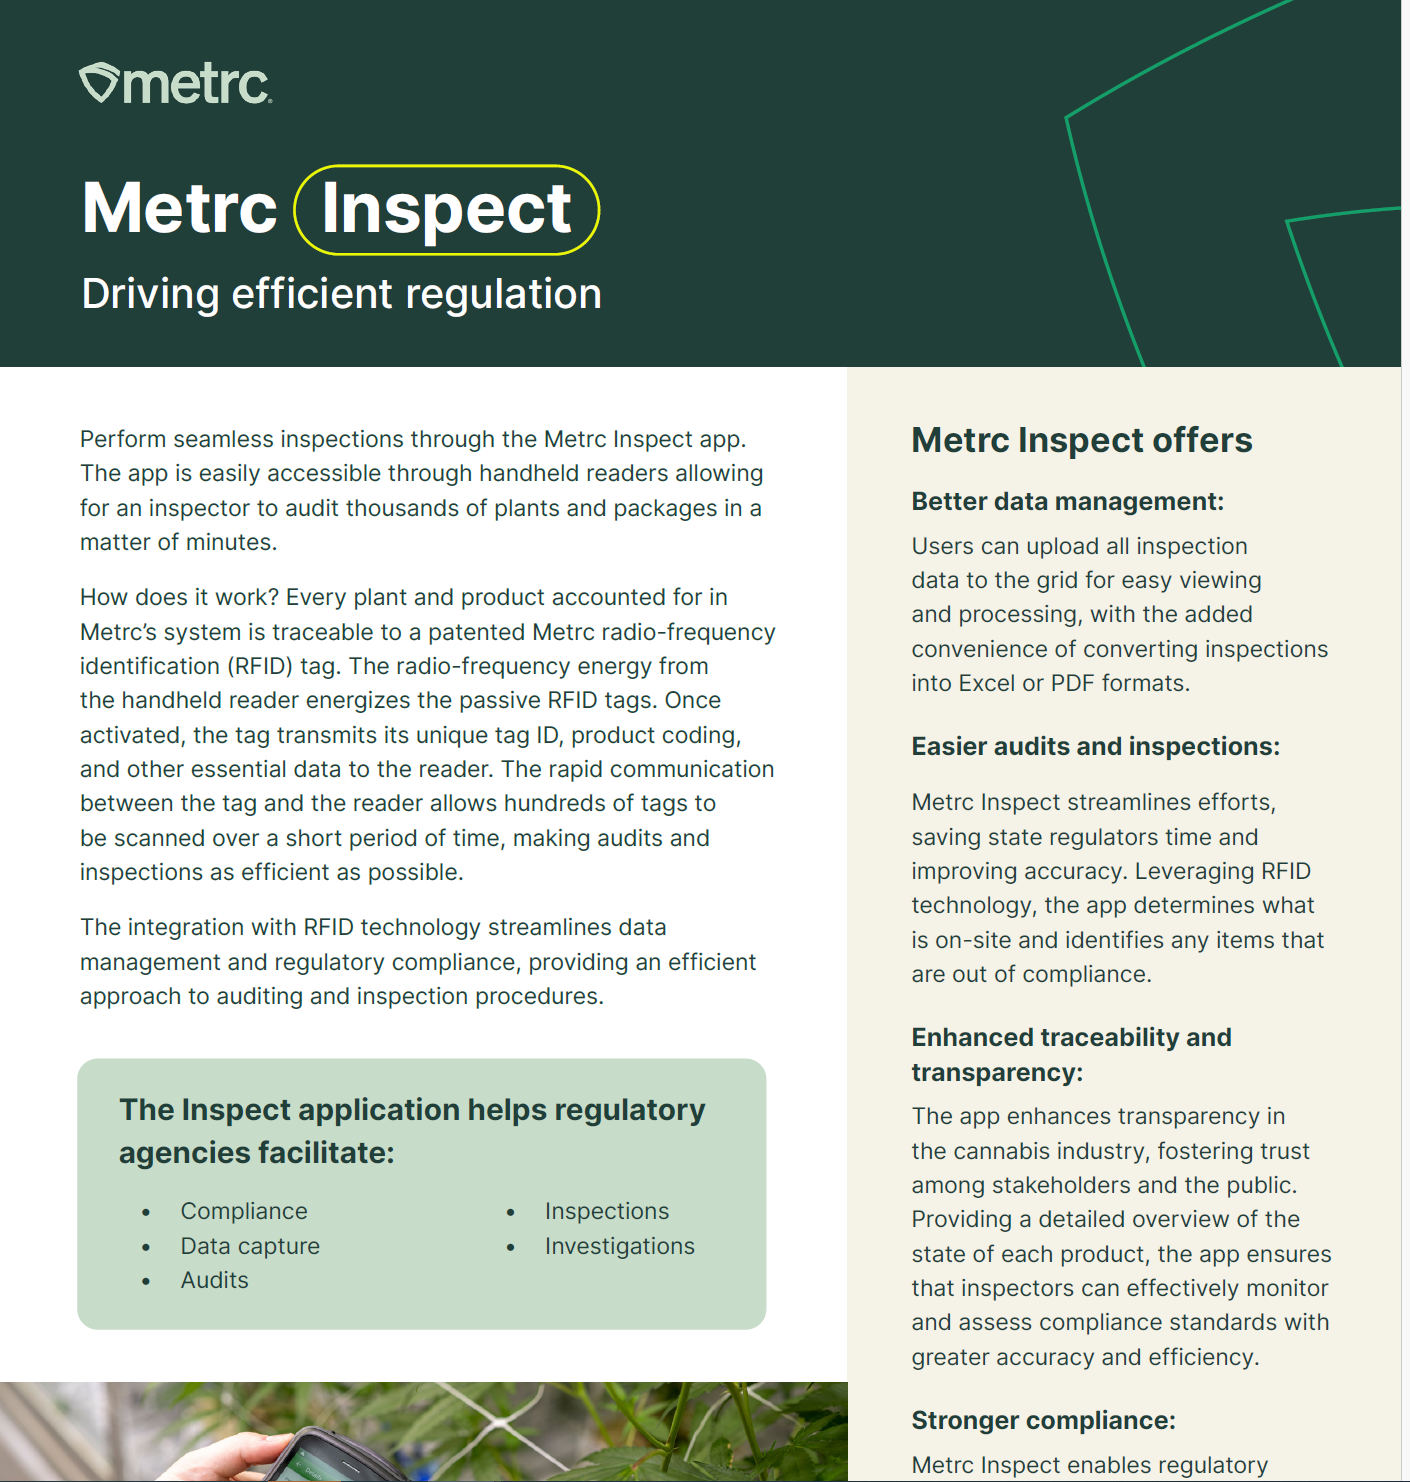 Metrc Inspect – Driving efficient regulation